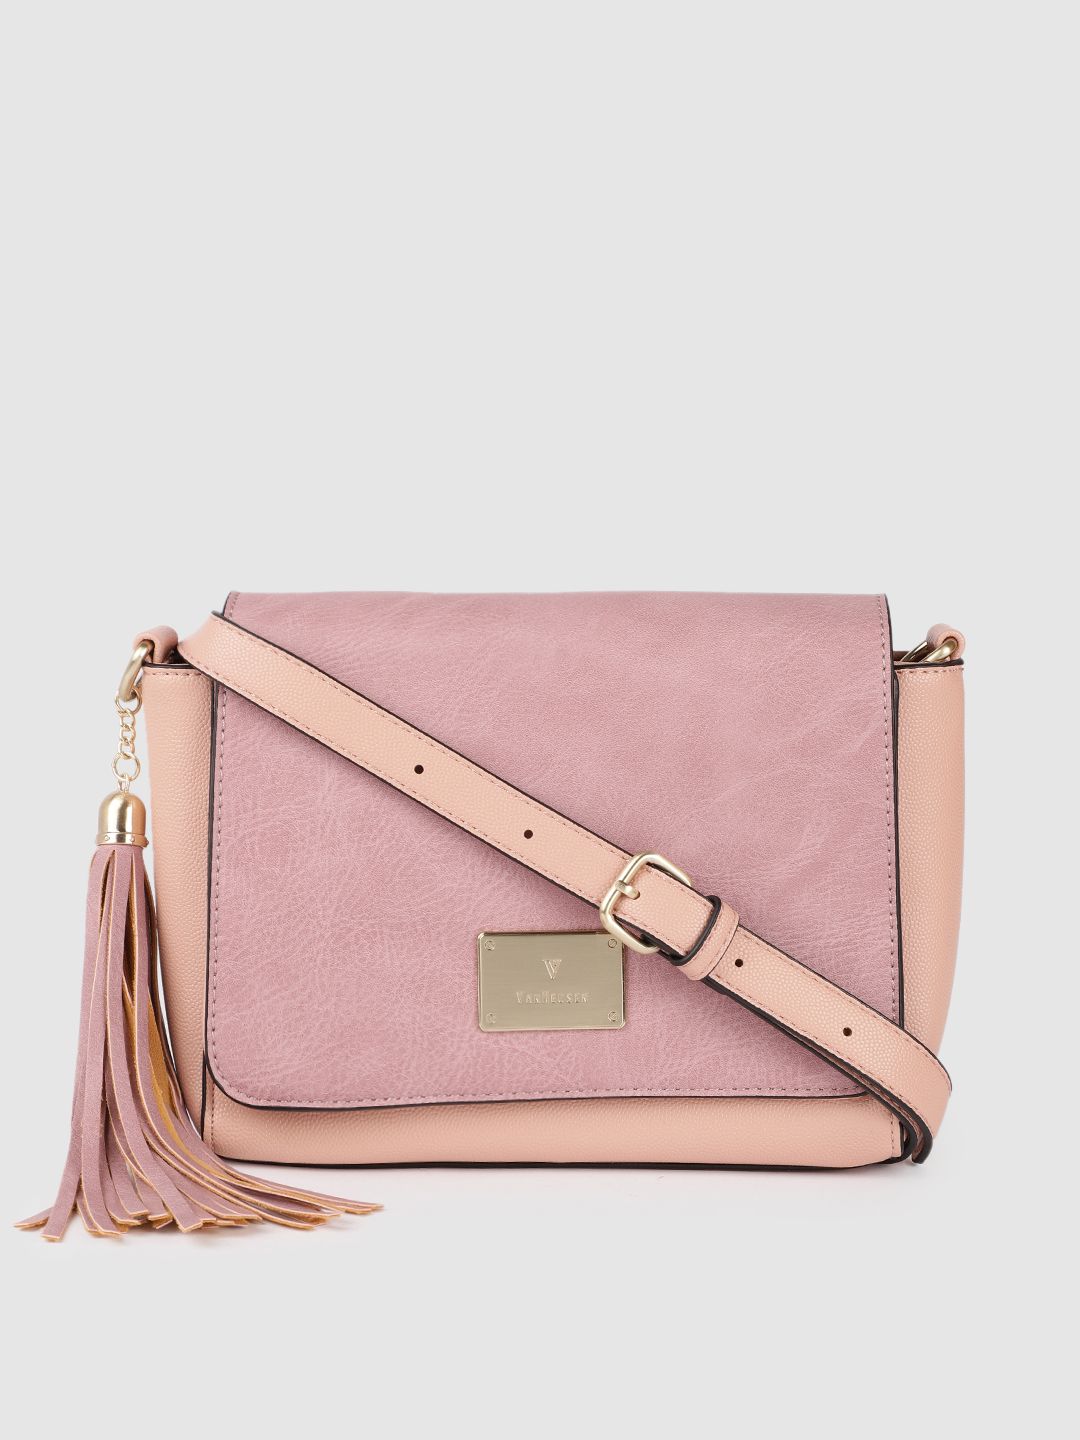 Van Heusen Pink Solid Sling Bag Price in India